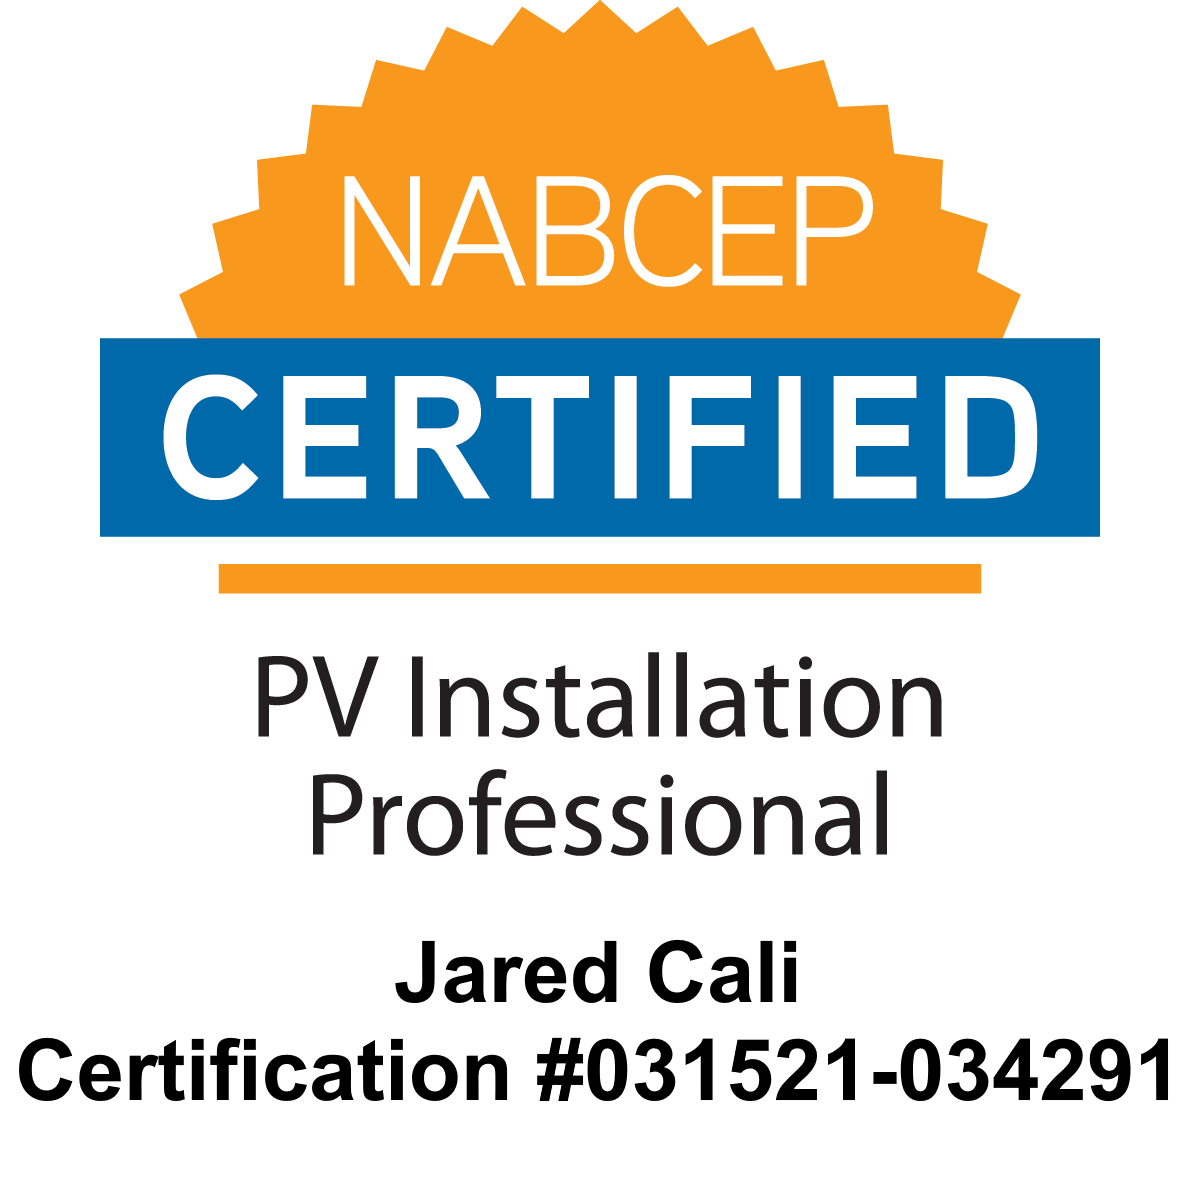 NABCEP Certification Badge for Jared Cali - Certification #031521-034291